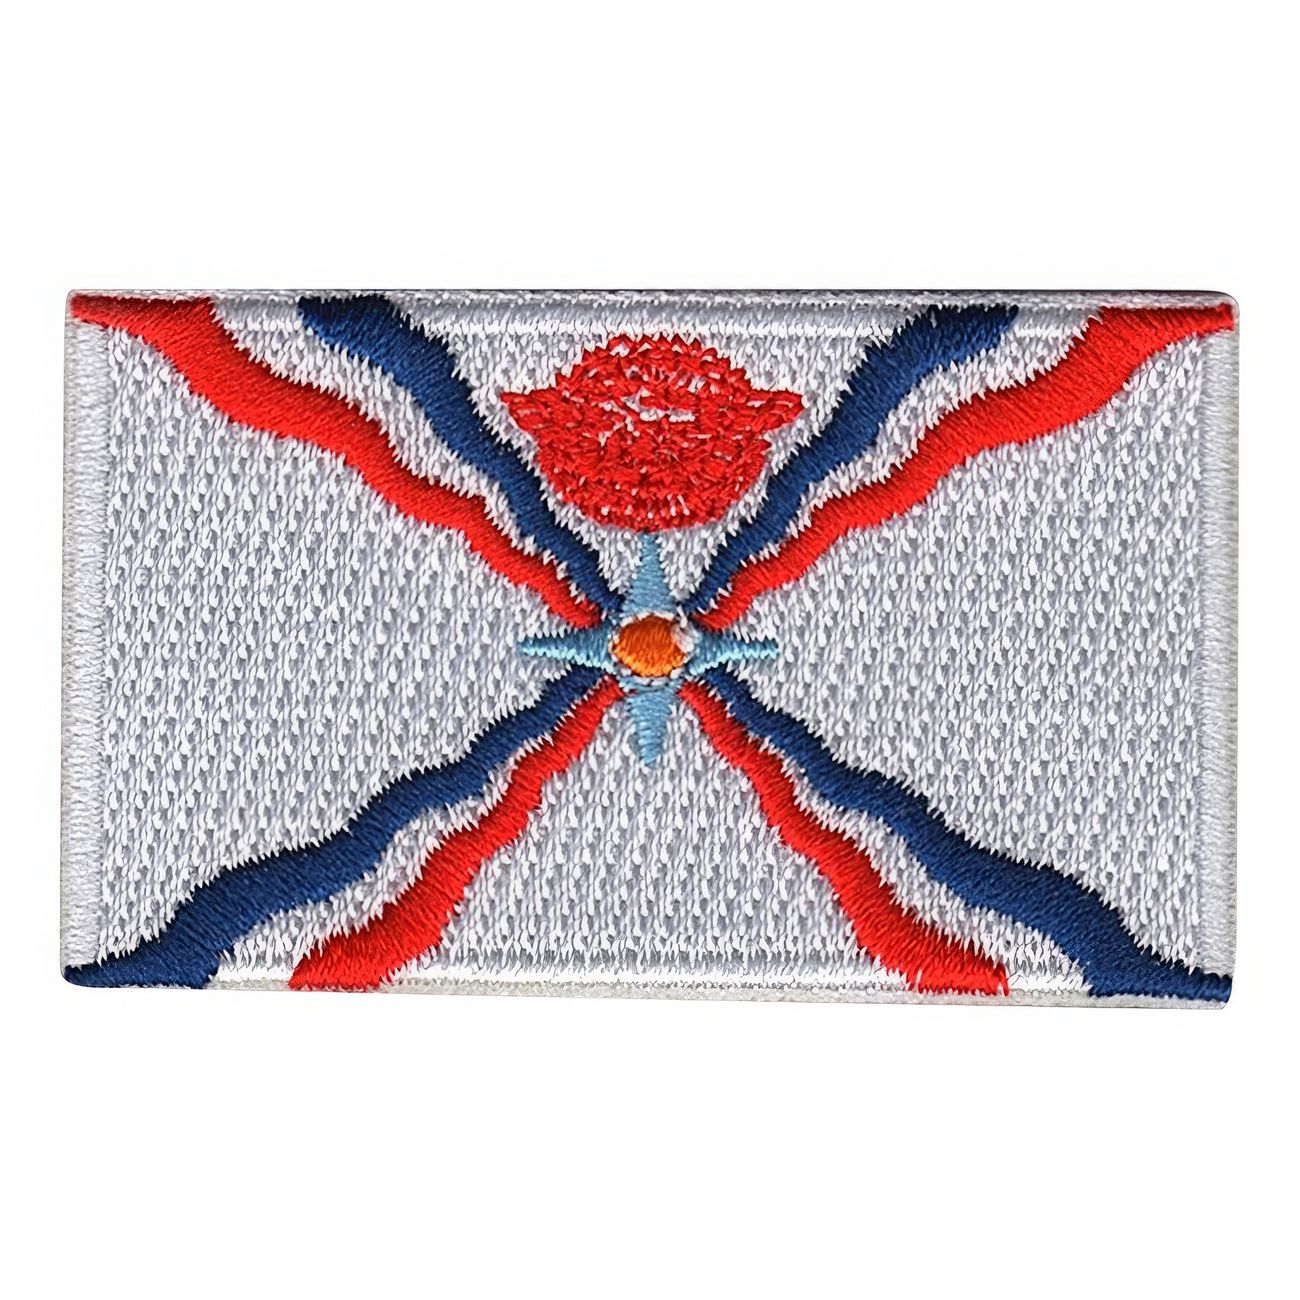 tygmarke-flagga-assyriska-94609-1